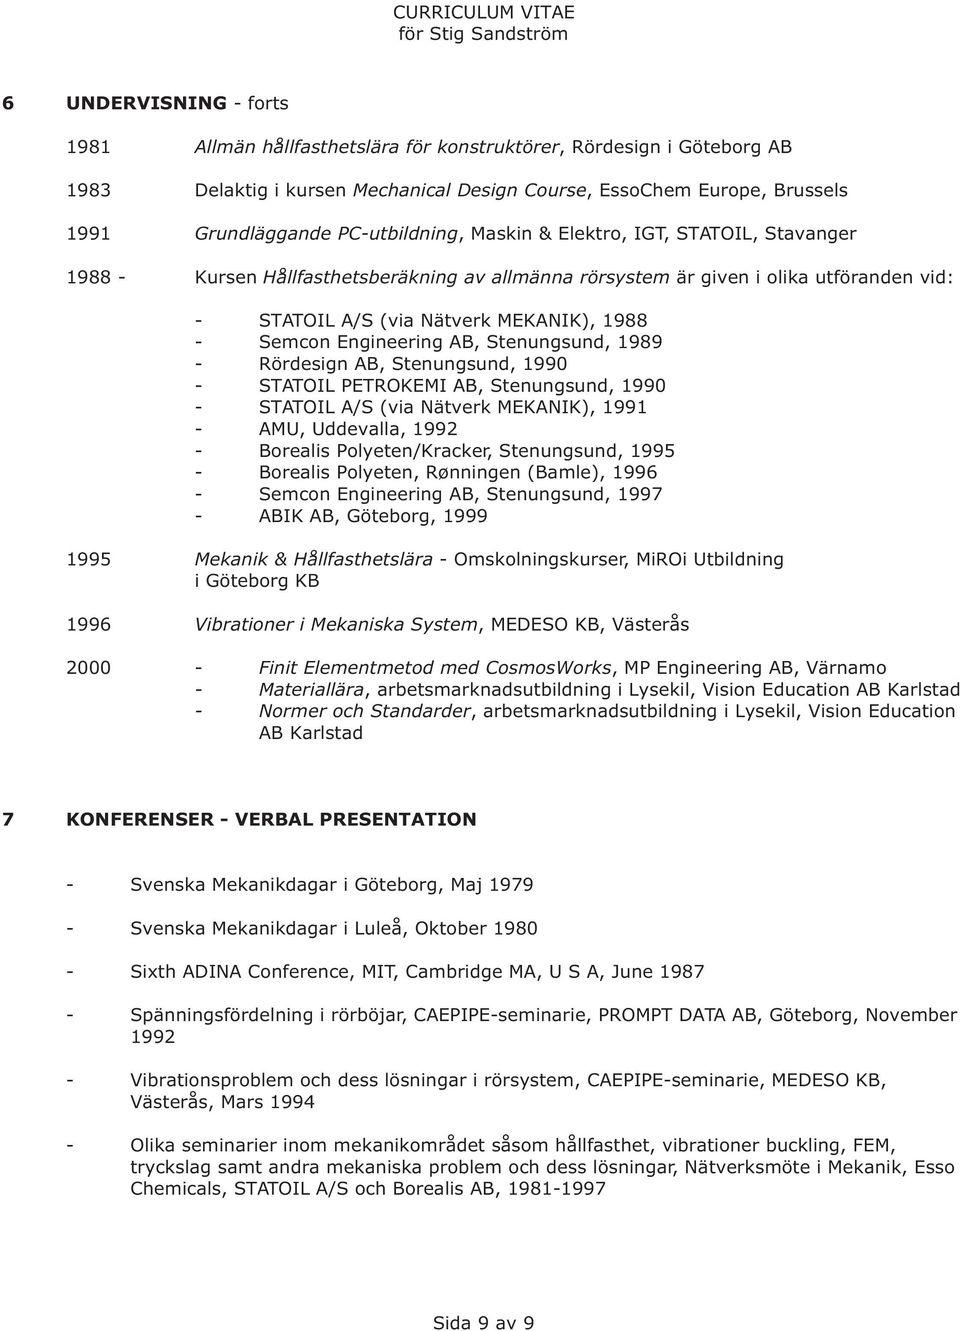 Engineering AB,, 1989 - Rördesign AB,, 1990 - STATOIL PETROKEMI AB,, 1990 - STATOIL A/S (via Nätverk MEKANIK), 1991 - AMU, Uddevalla, 1992 - Borealis Polyeten/Kracker,, 1995 - Borealis Polyeten,